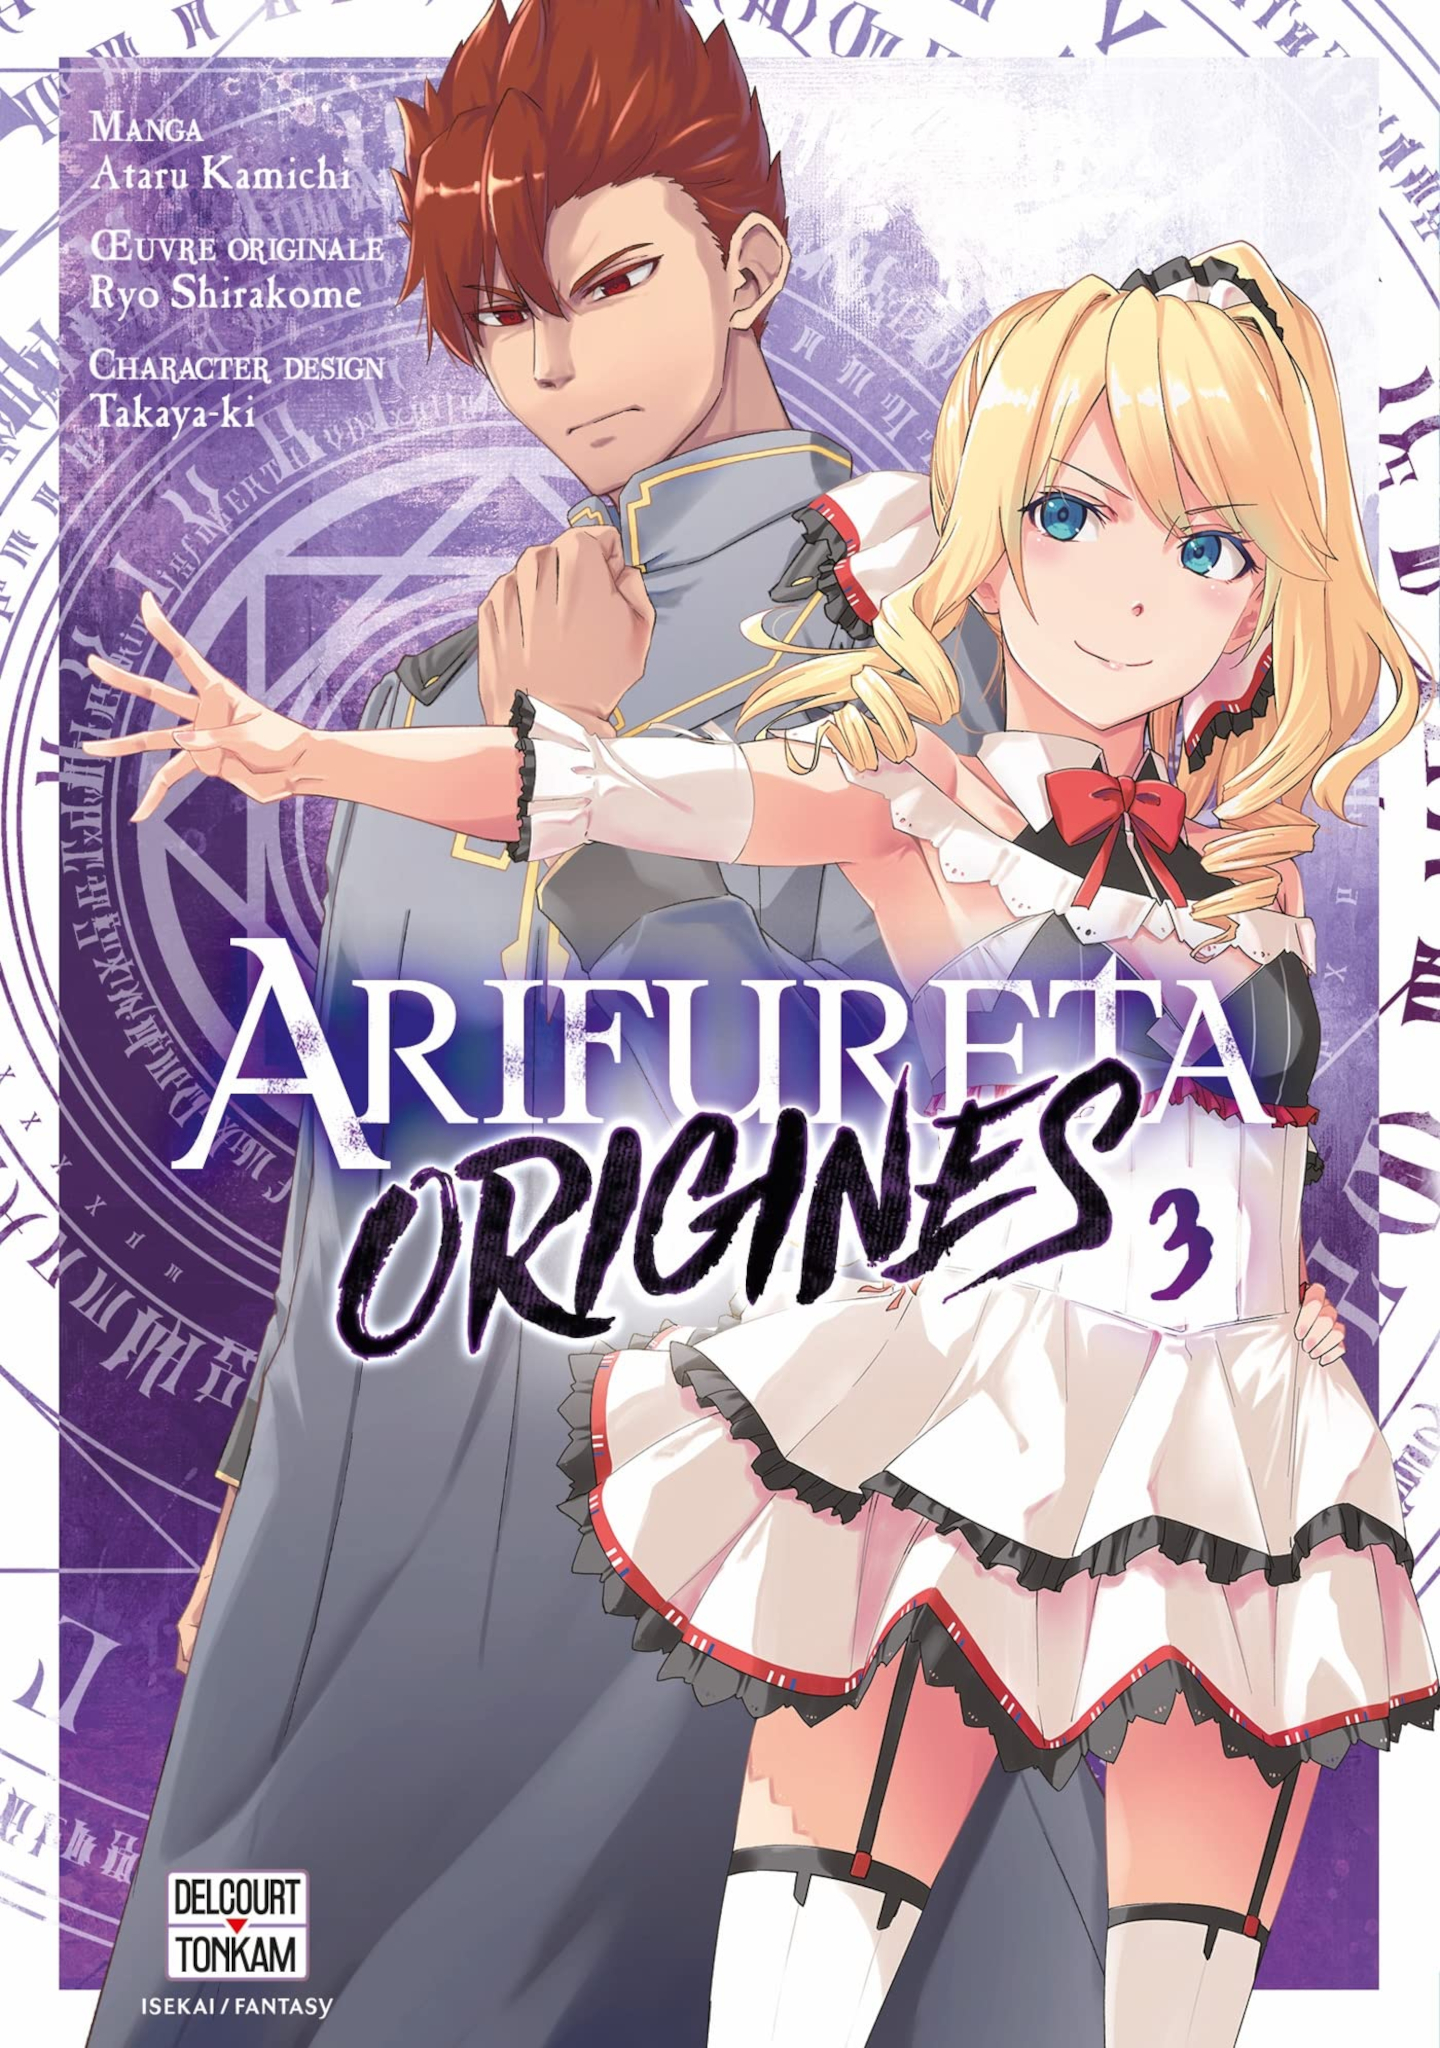 Tome 3 du manga Arifureta - Origines